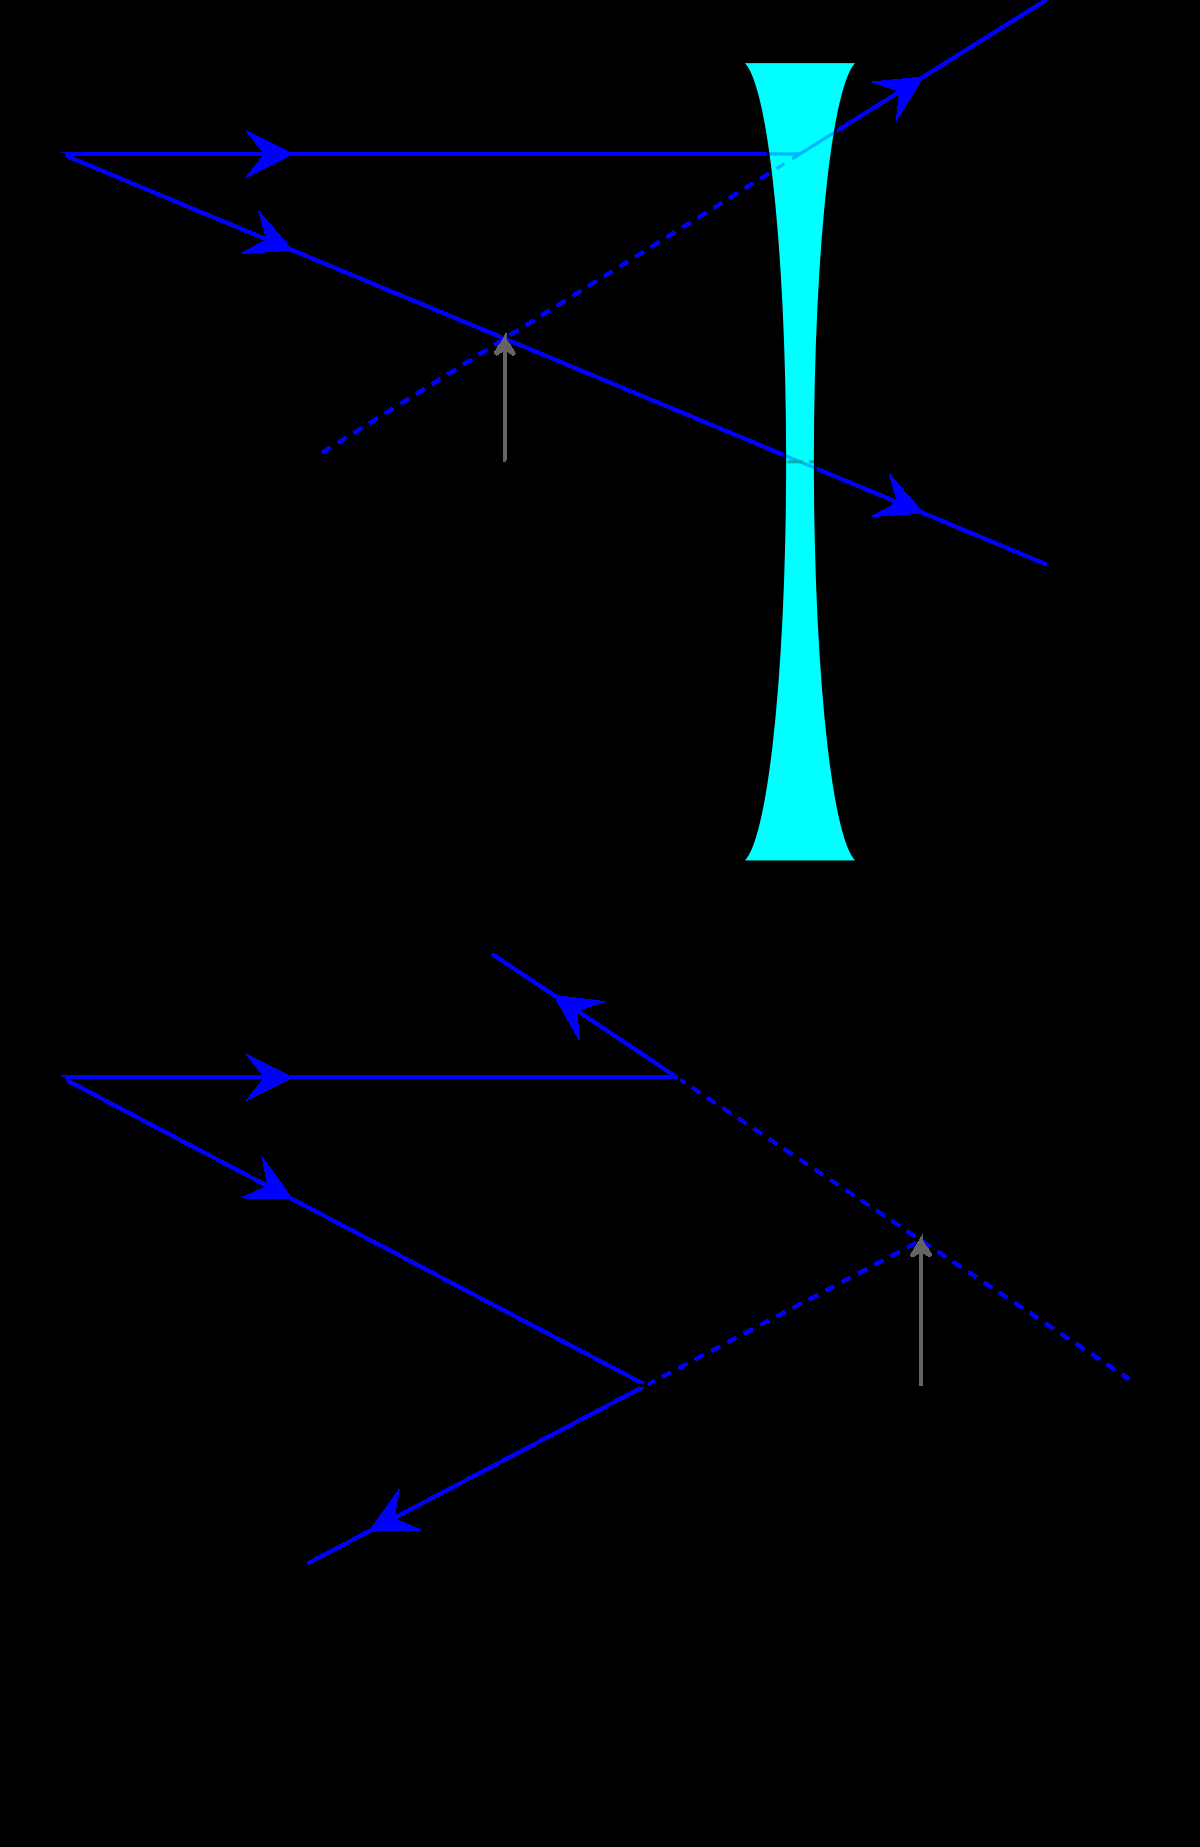 Ray Diagram Definition Virtual Image Wikipedia